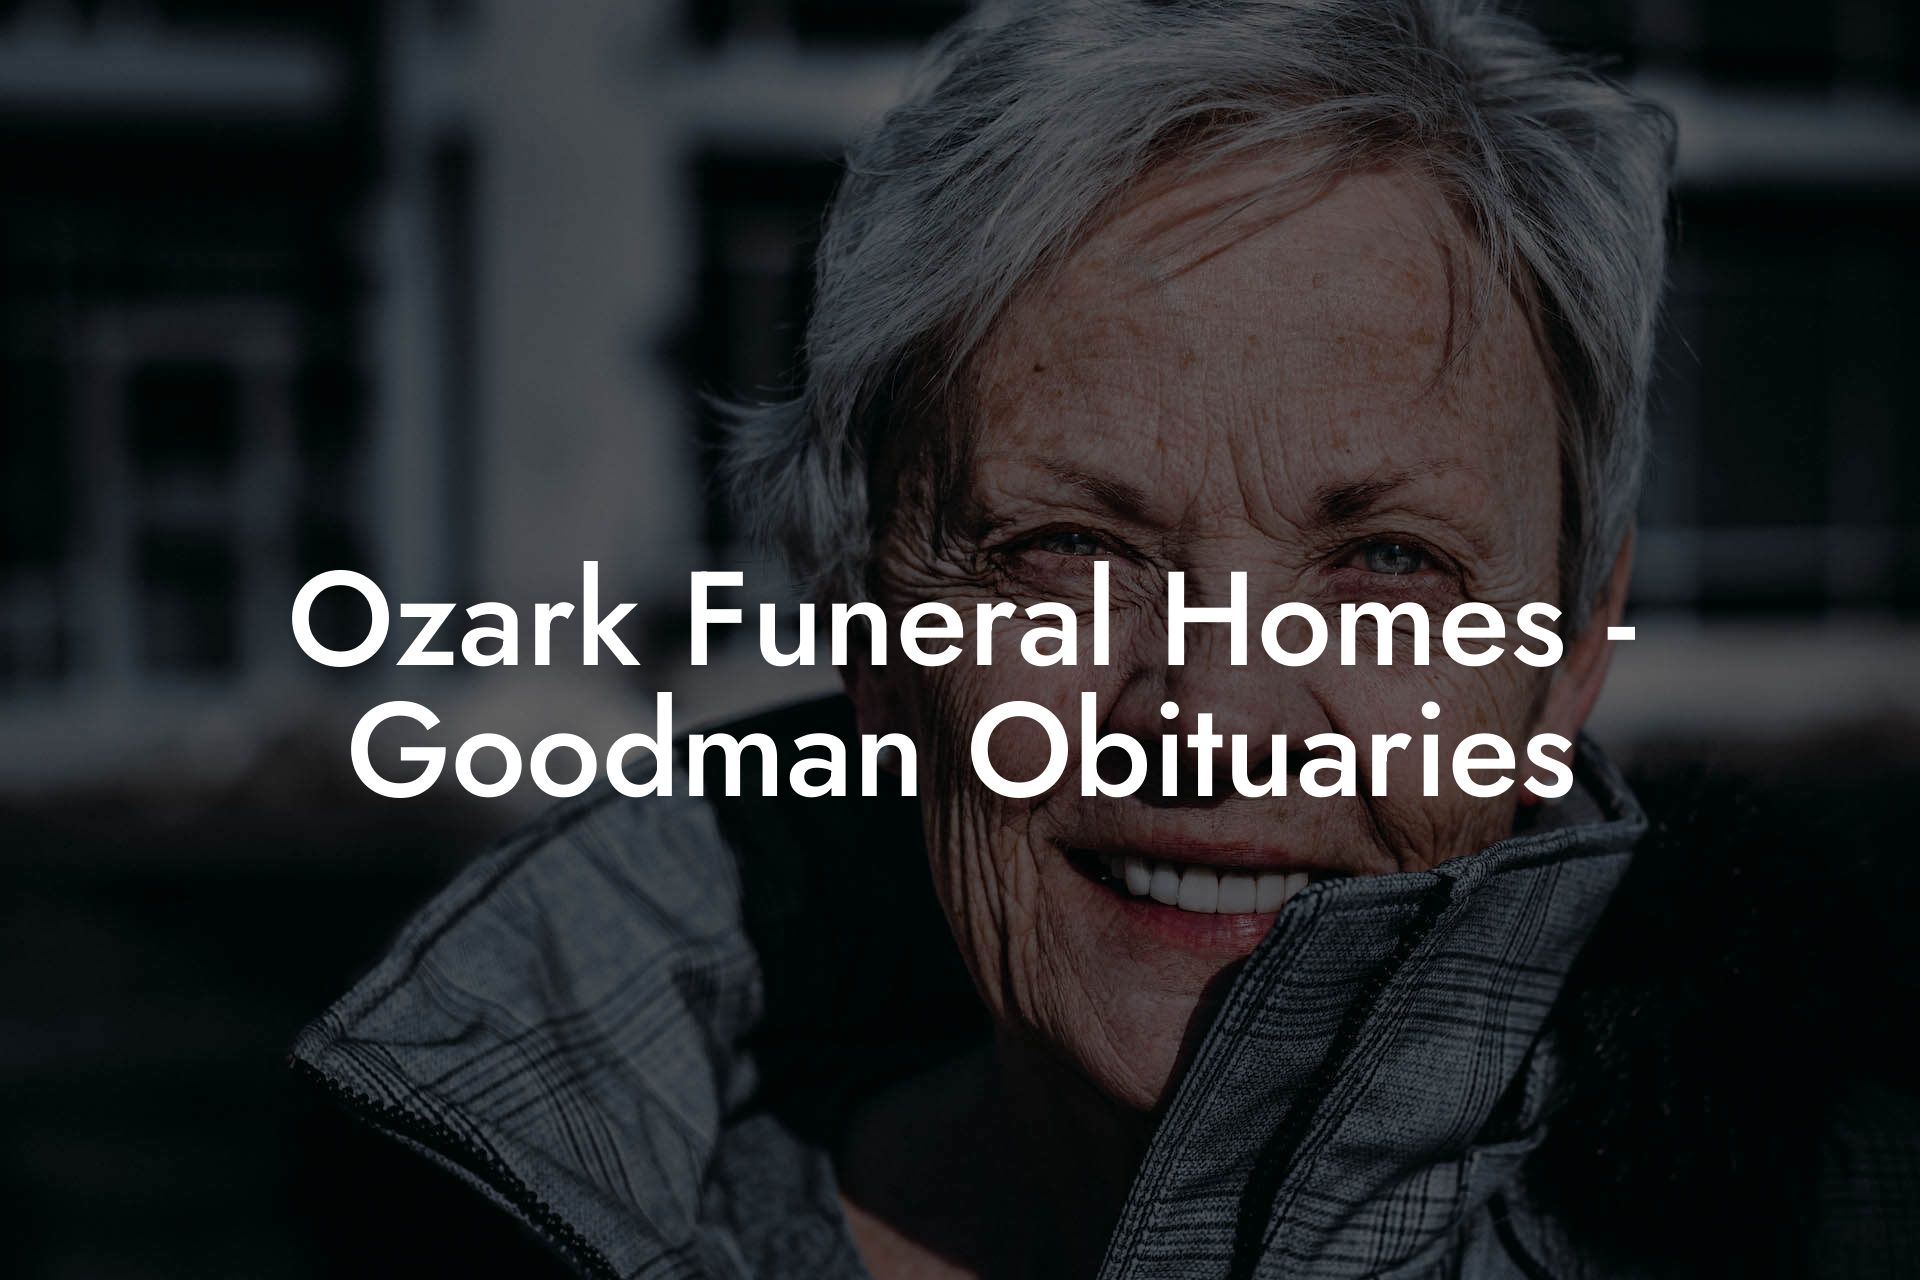 Ozark Funeral Homes - Goodman Obituaries